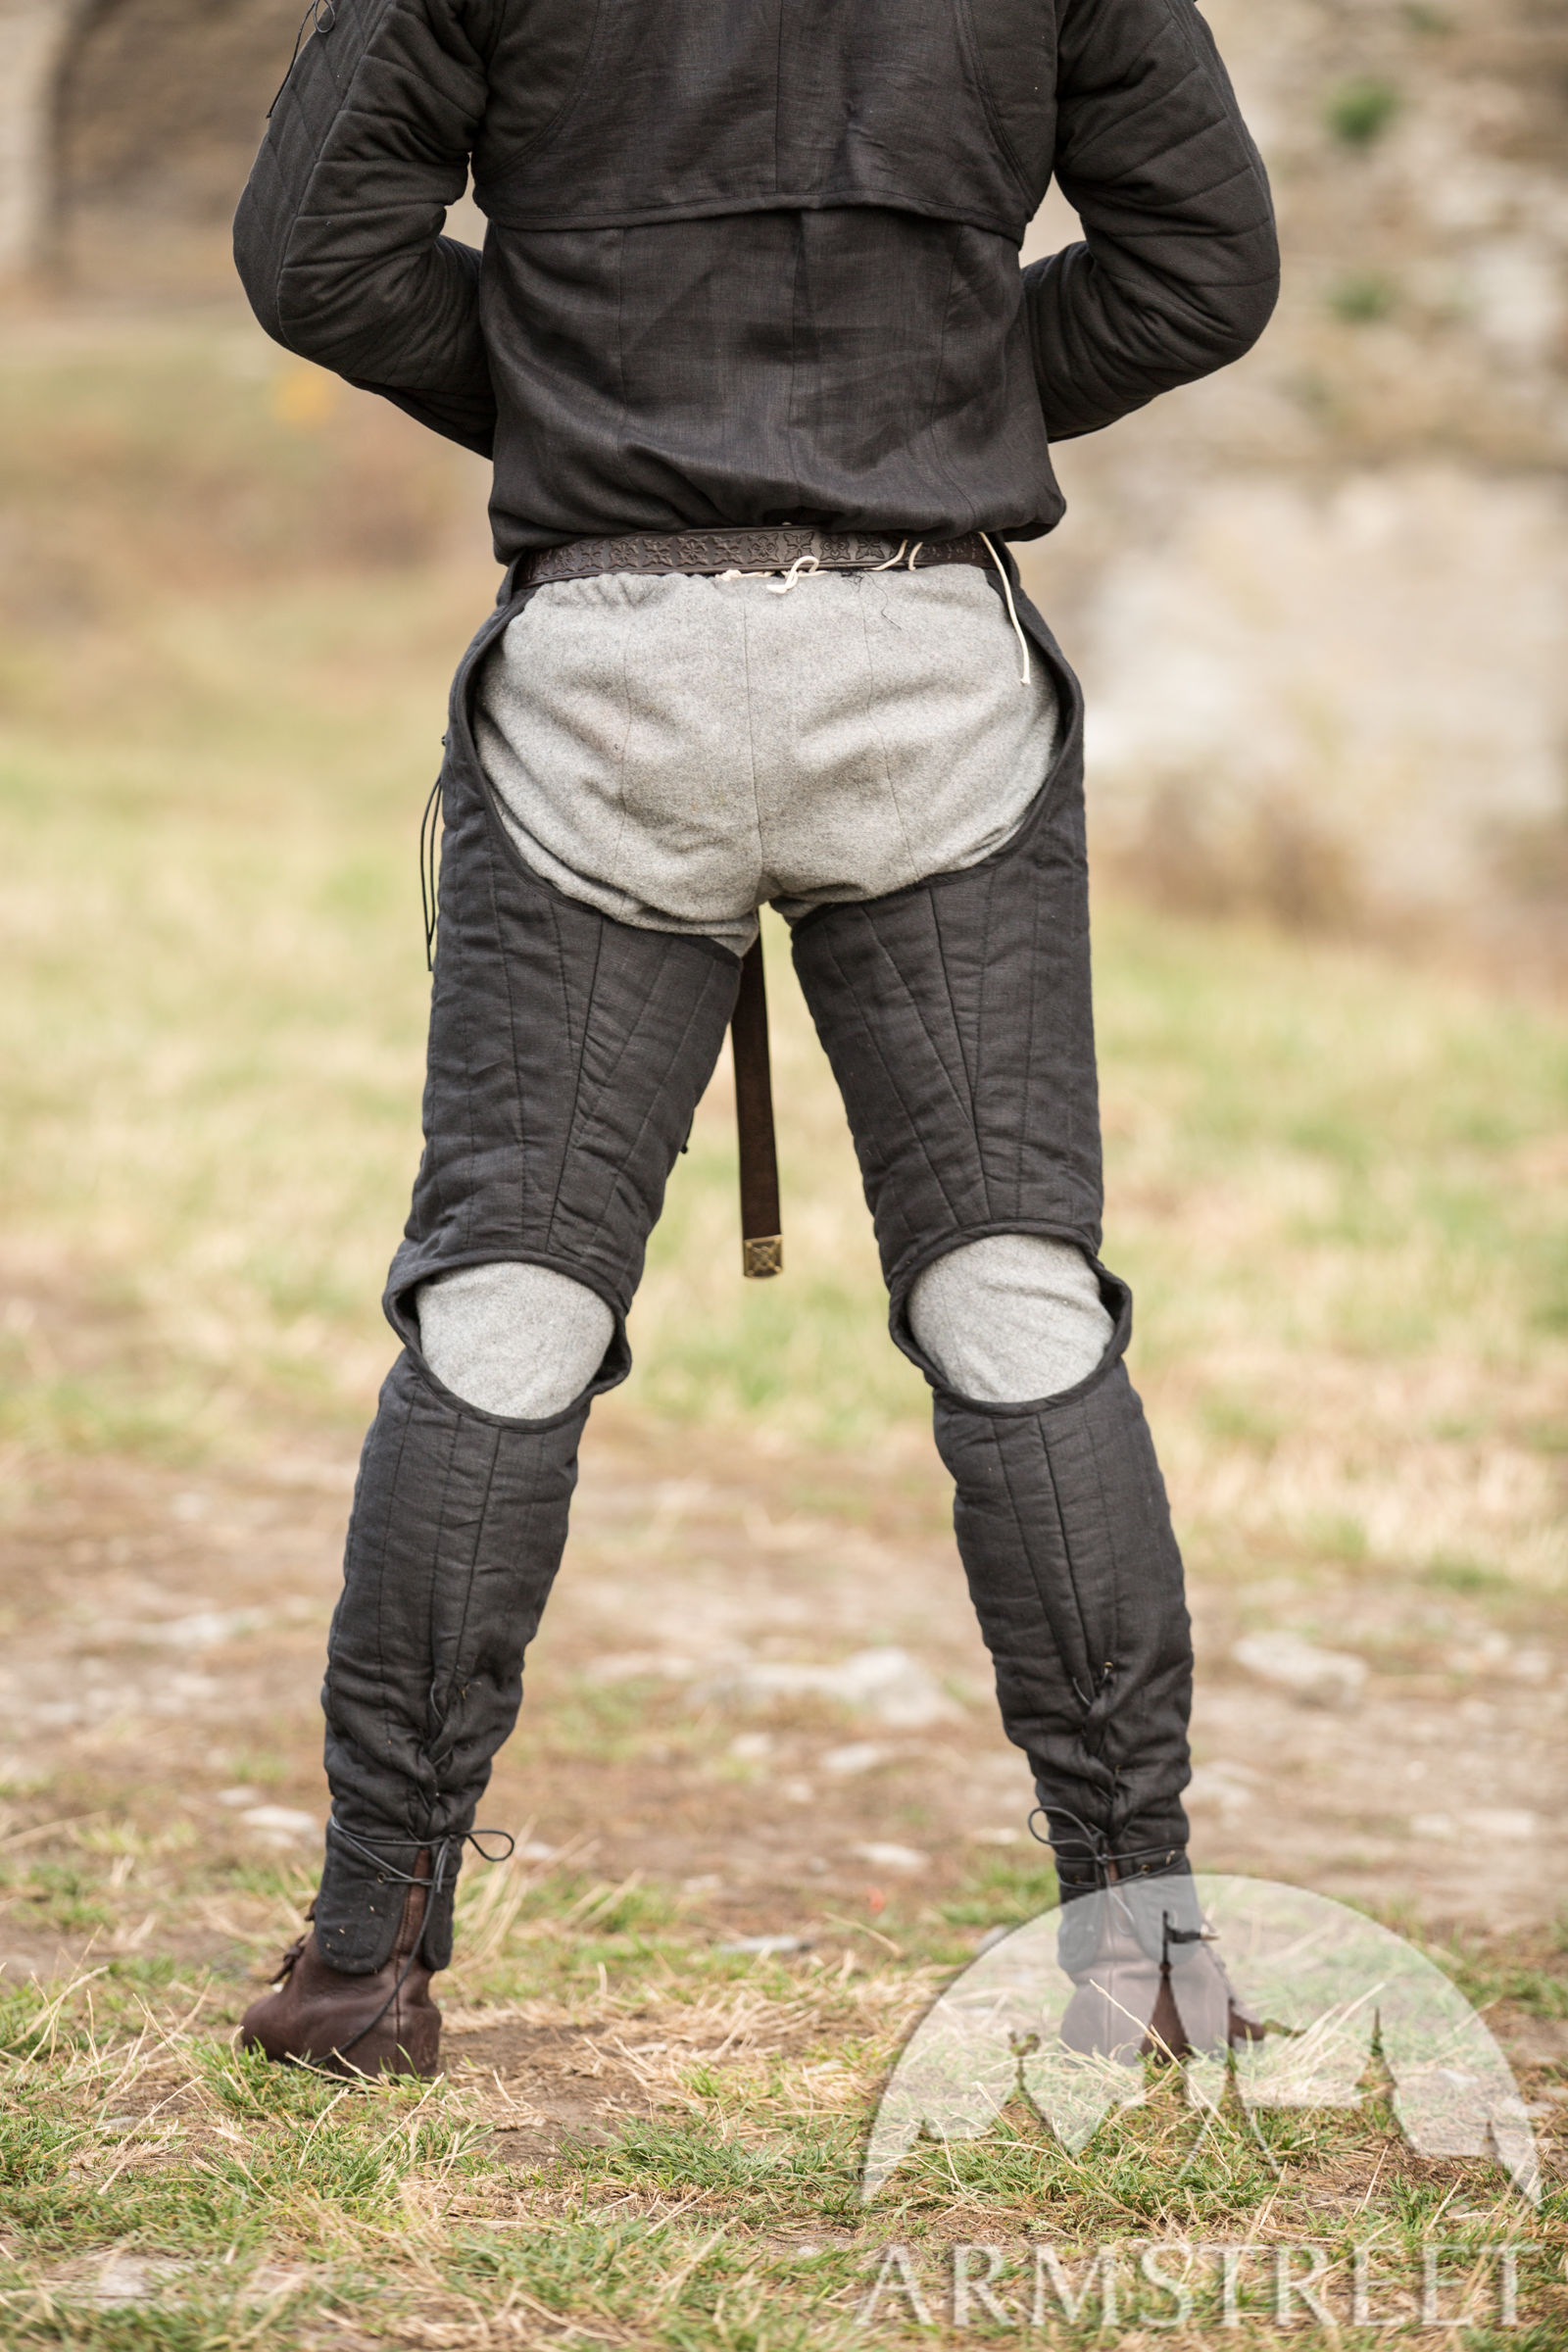 Pantaloni chausses medievali sotto armatura